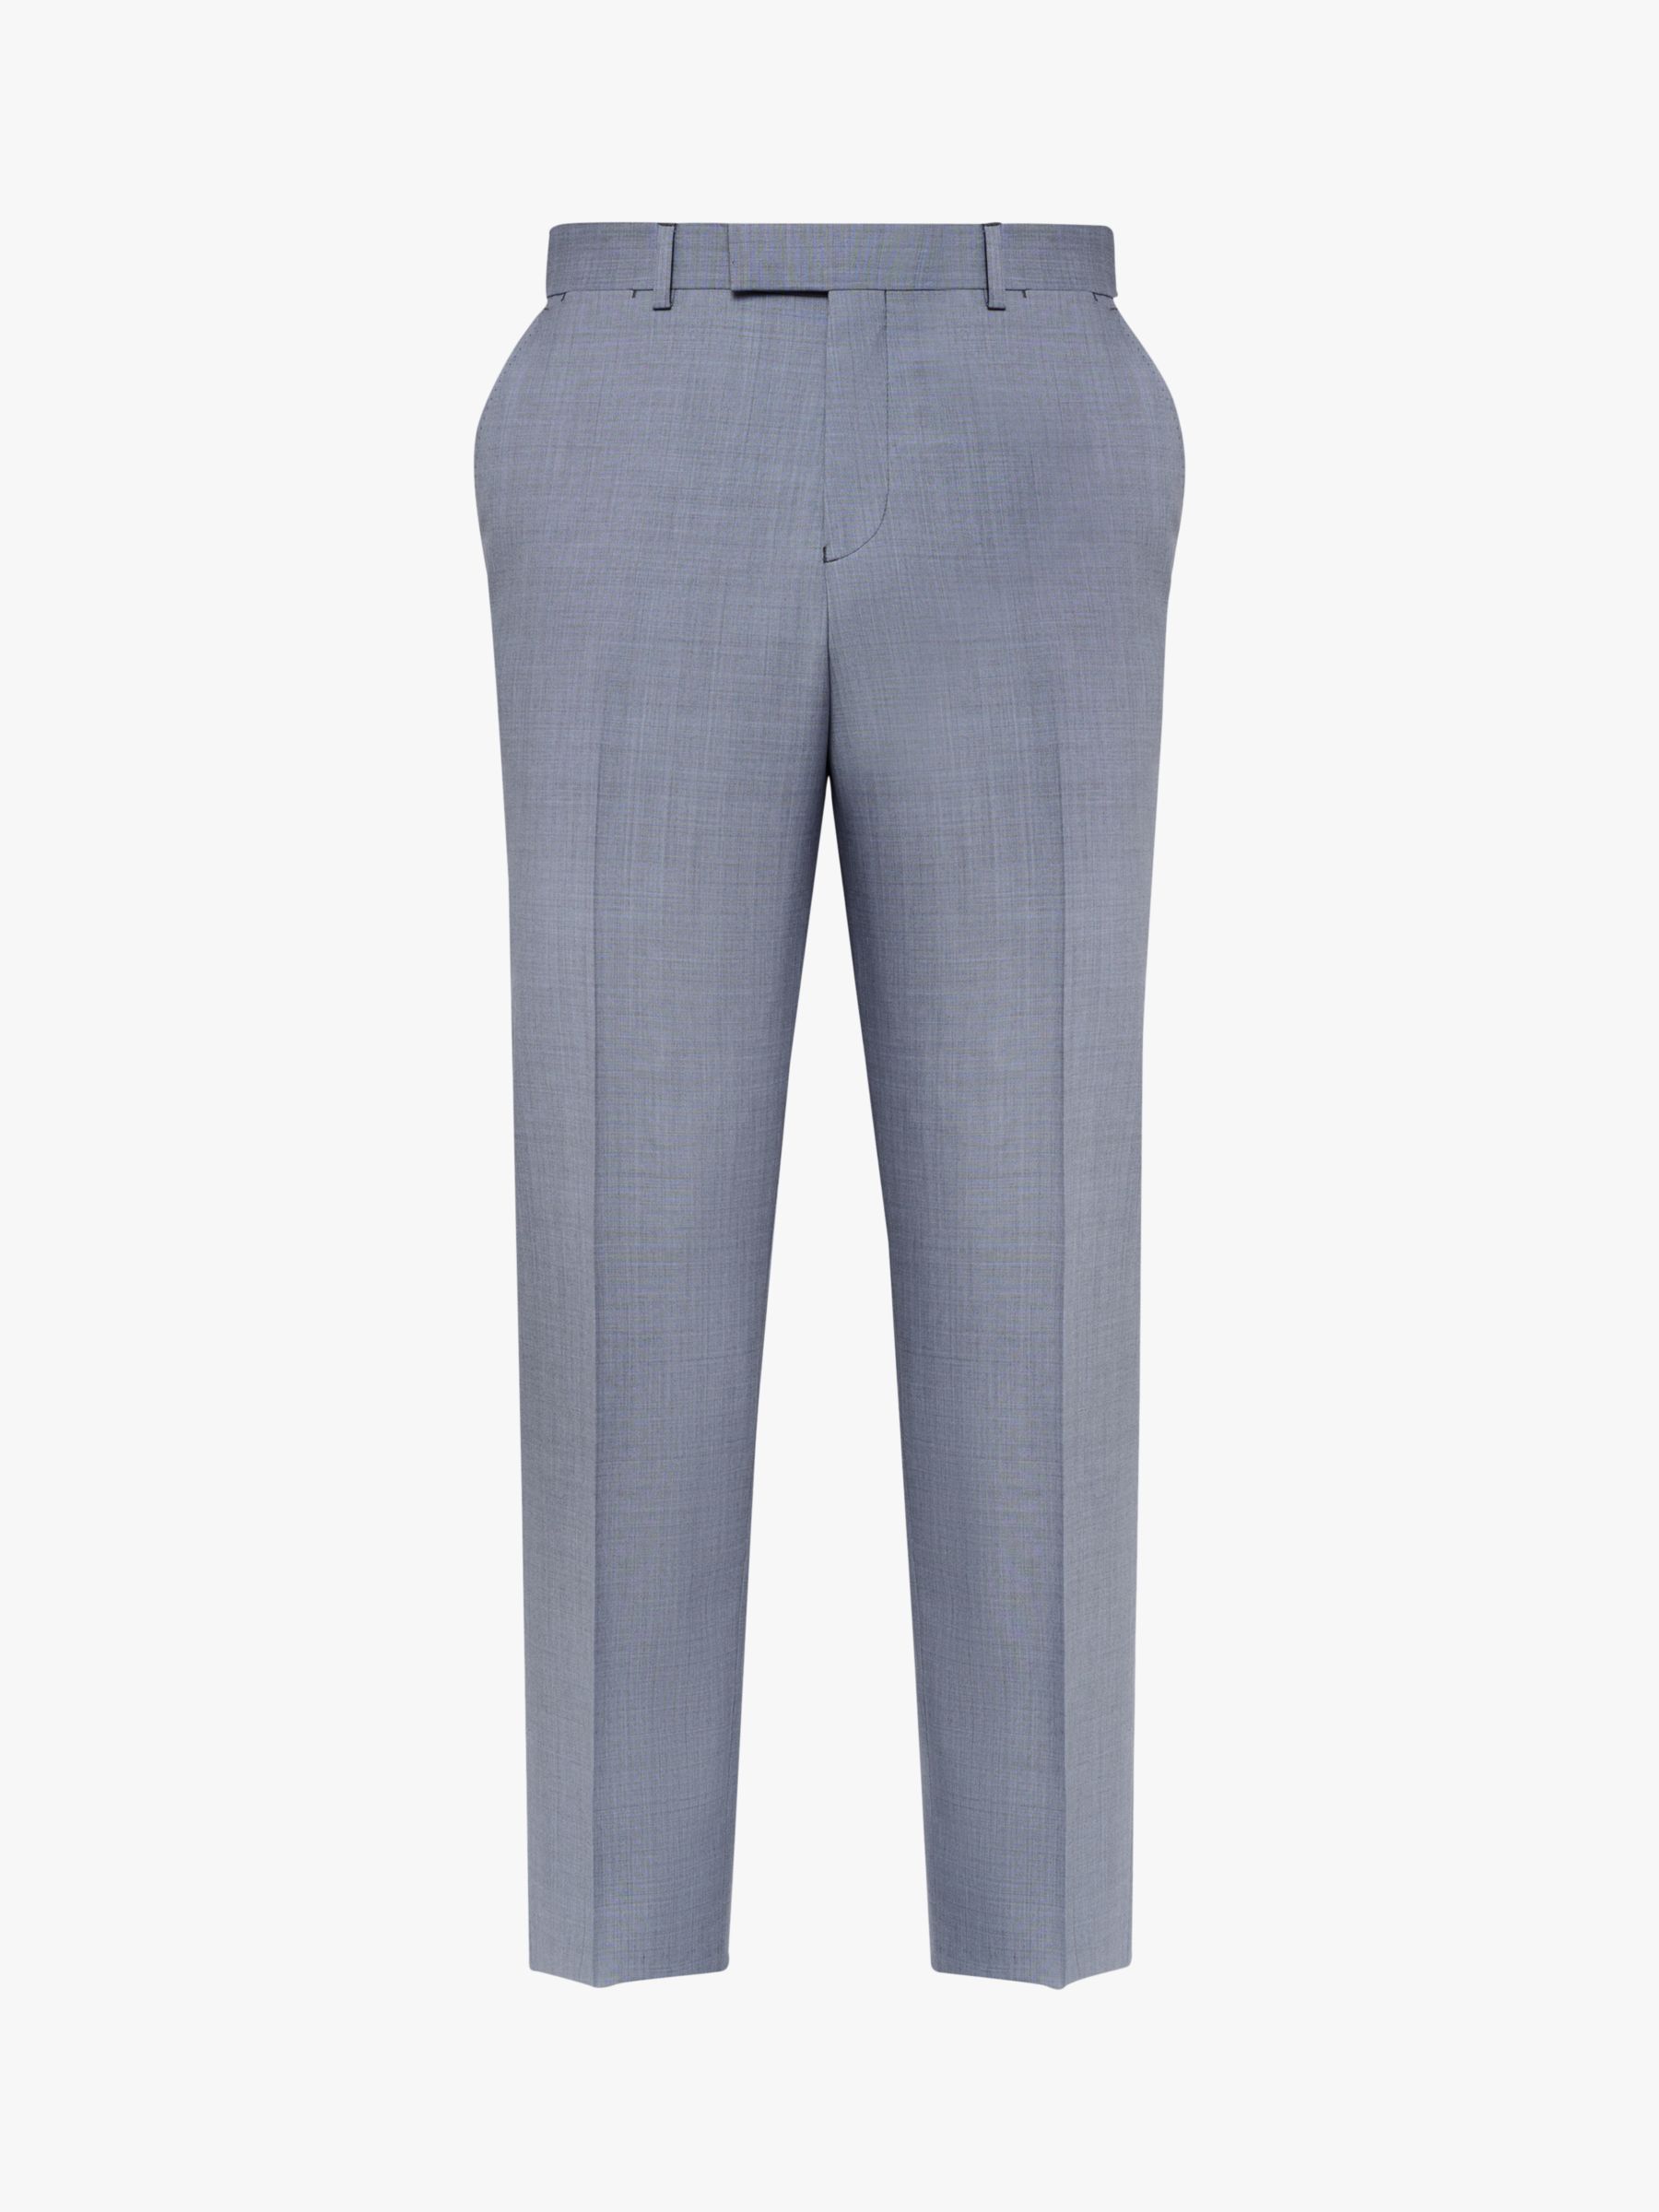 Jaeger Slim Melange Smart Trousers, Grey